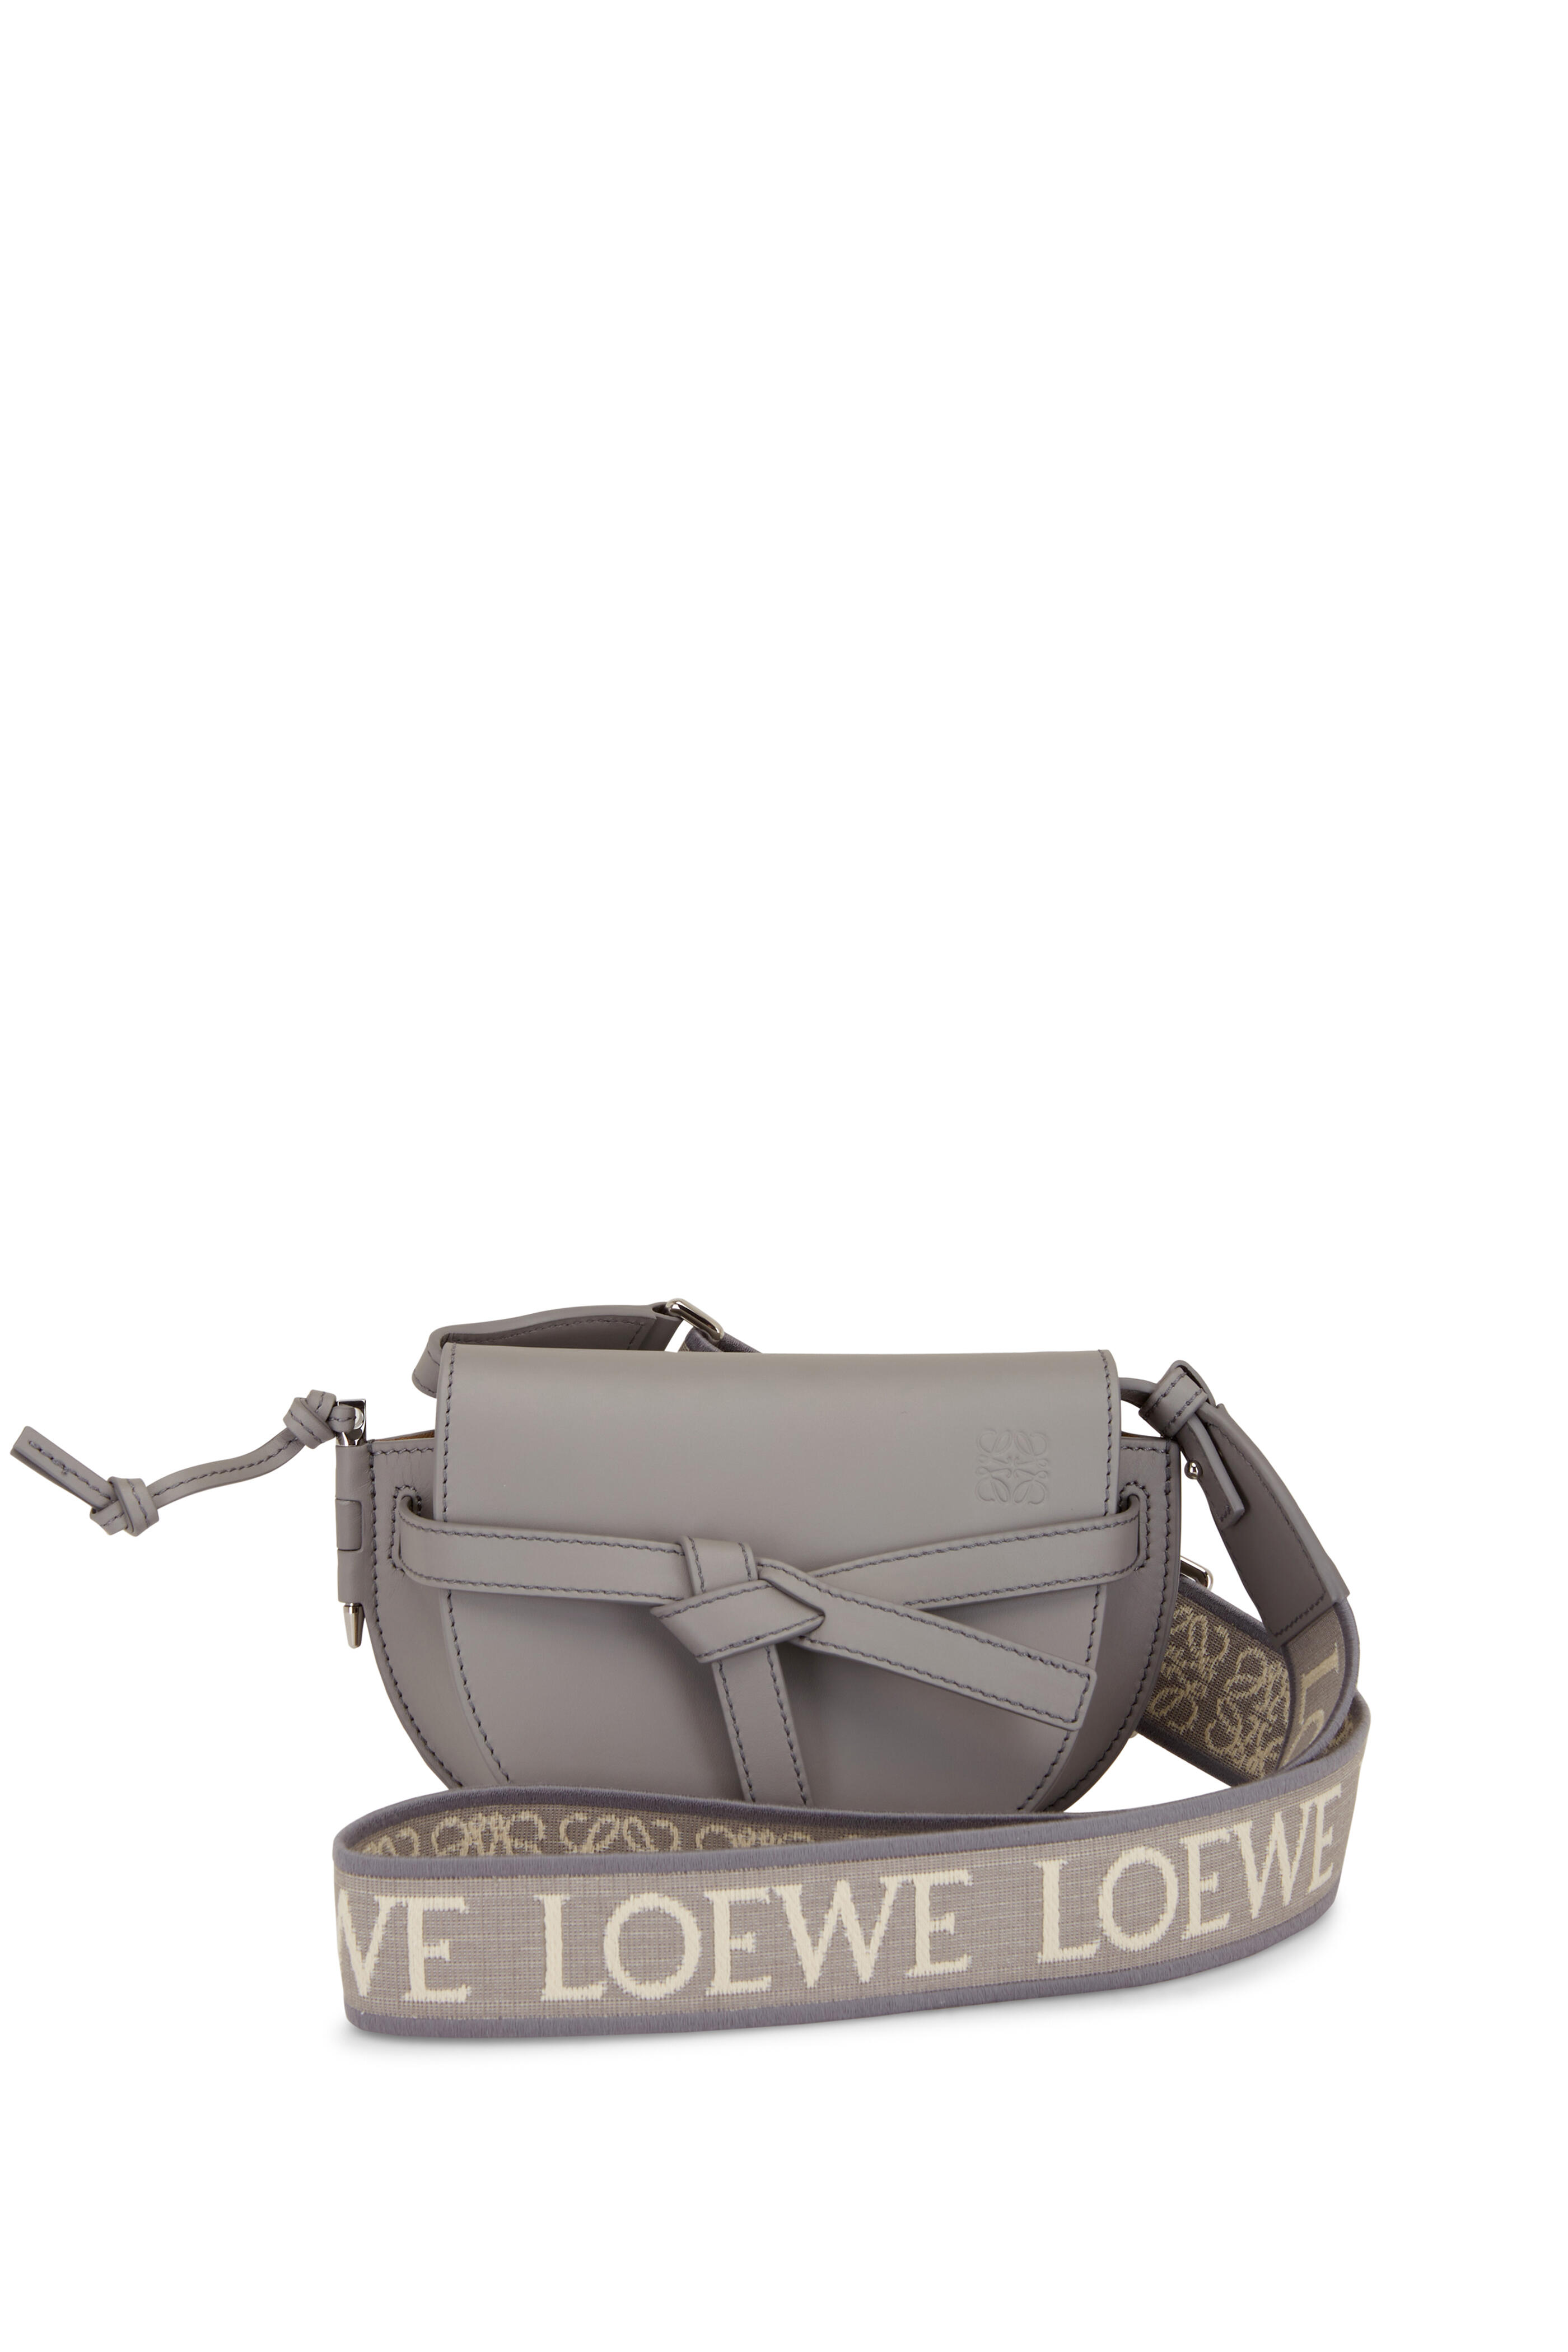 Loewe Goya Small Leather Shoulder Bag - Gray